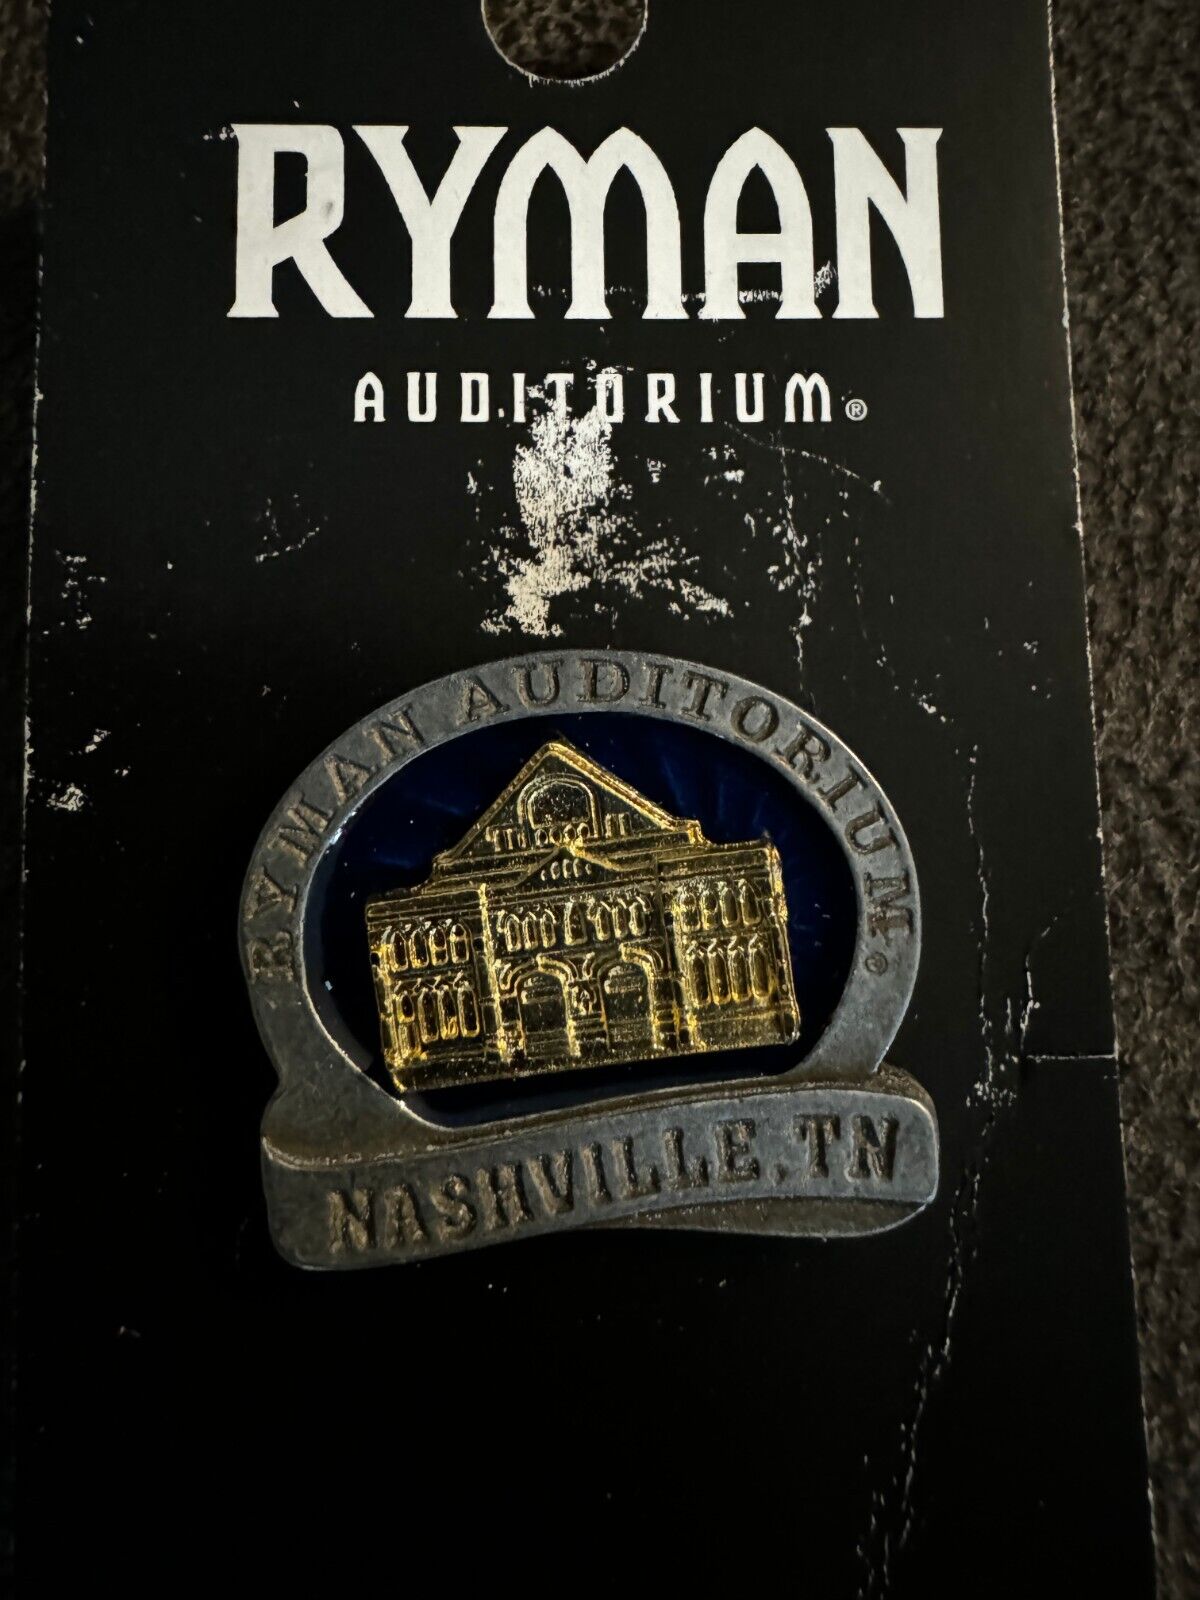 The Ryman Auditorium -Nashville, Tennessee - Collector Pin